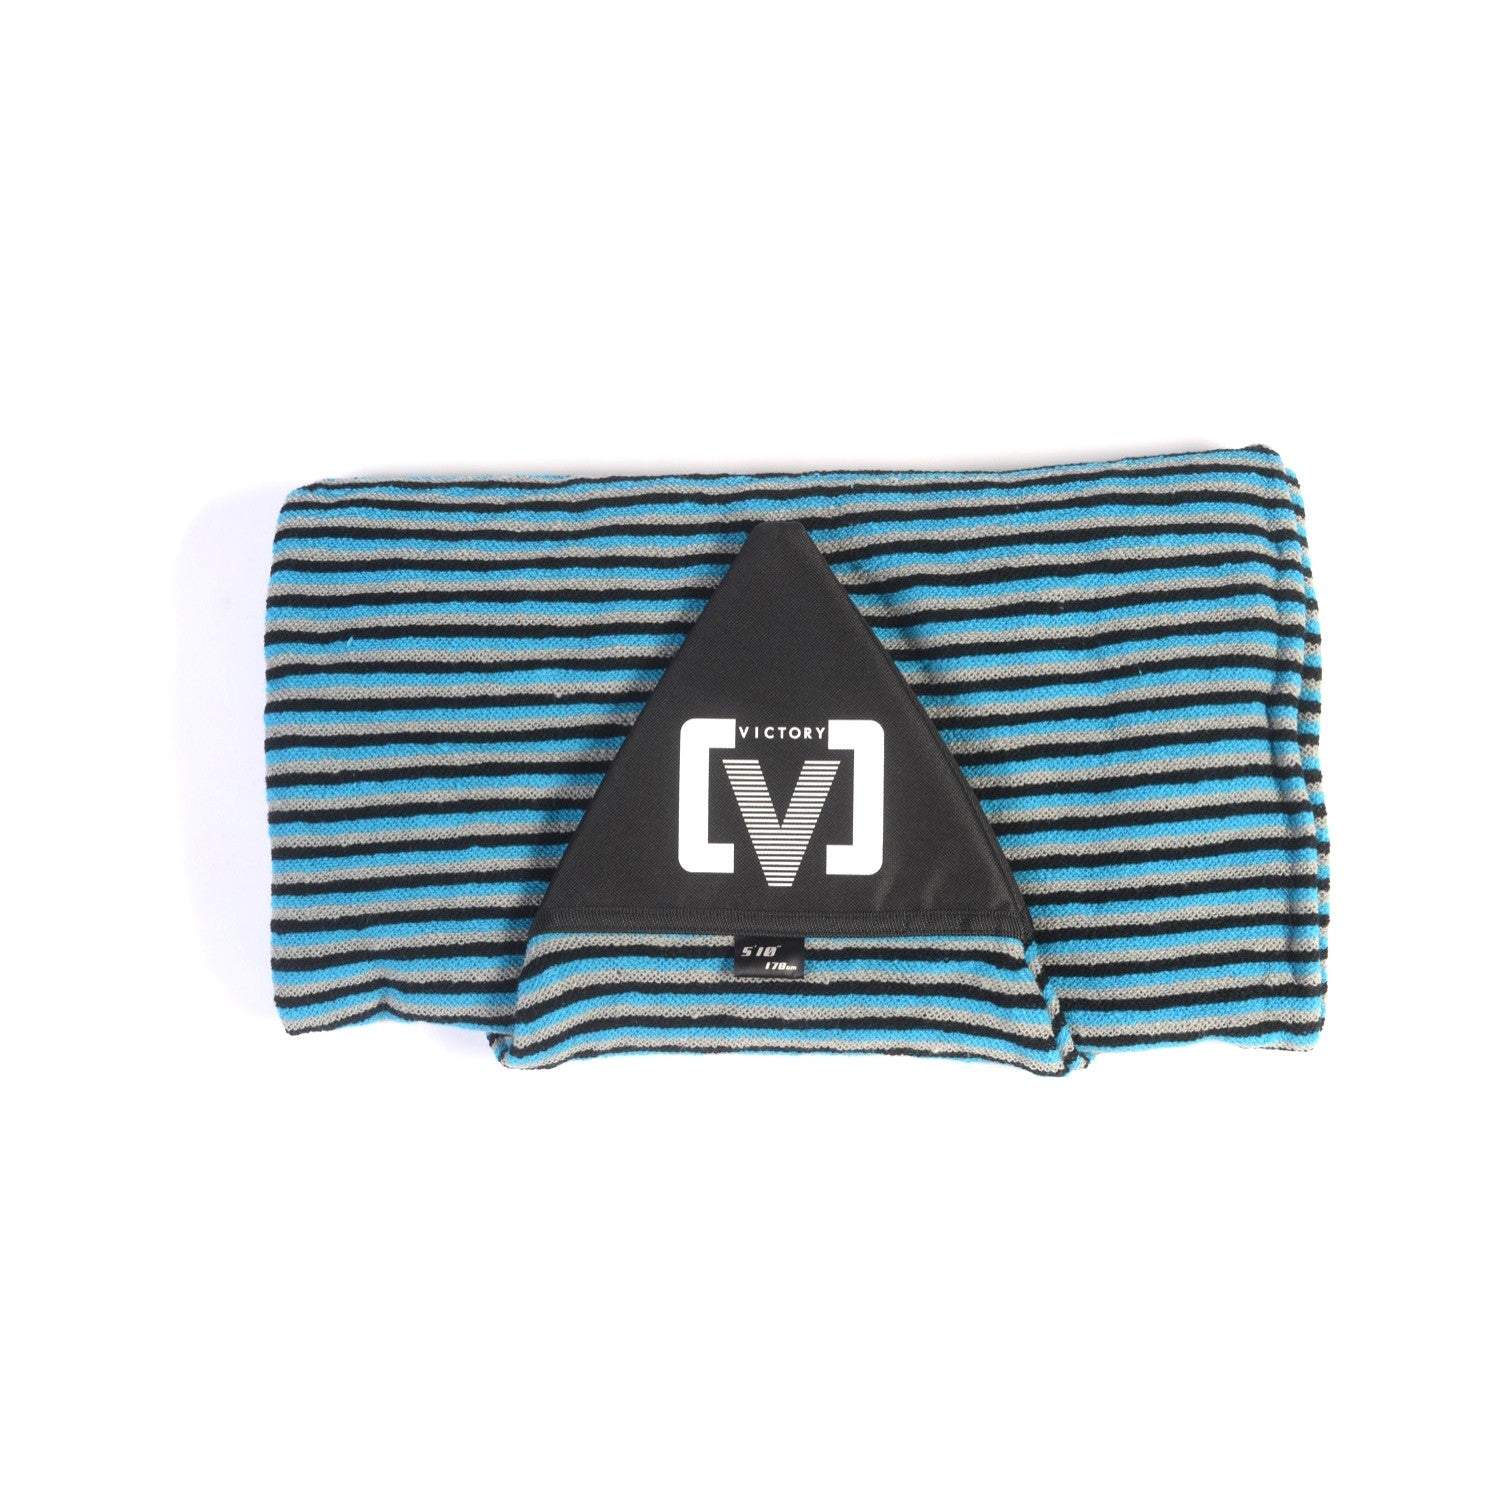 VICTORY - Surf sock cover - Shortboard - 5'10 - Black / Green